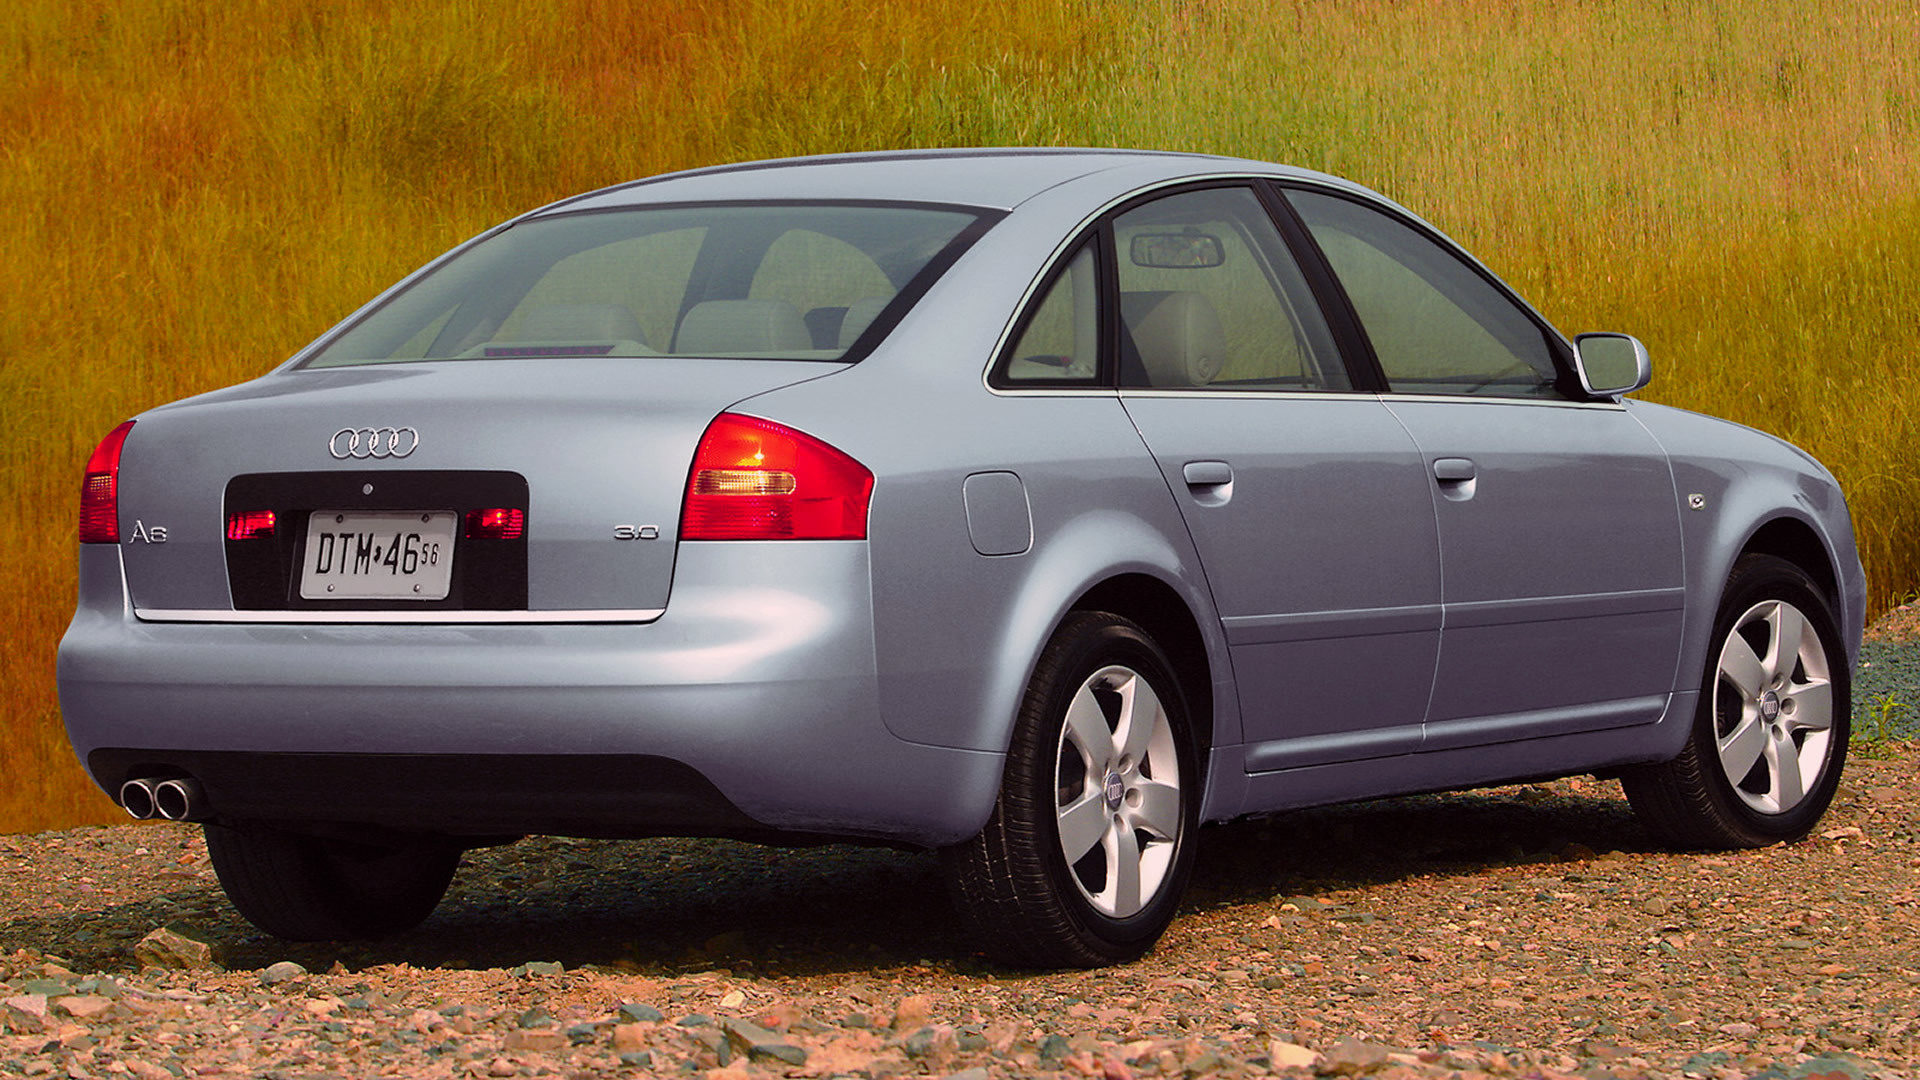 2002 Audi A6 Sedan (US) - Wallpapers and HD Images | Car Pixel